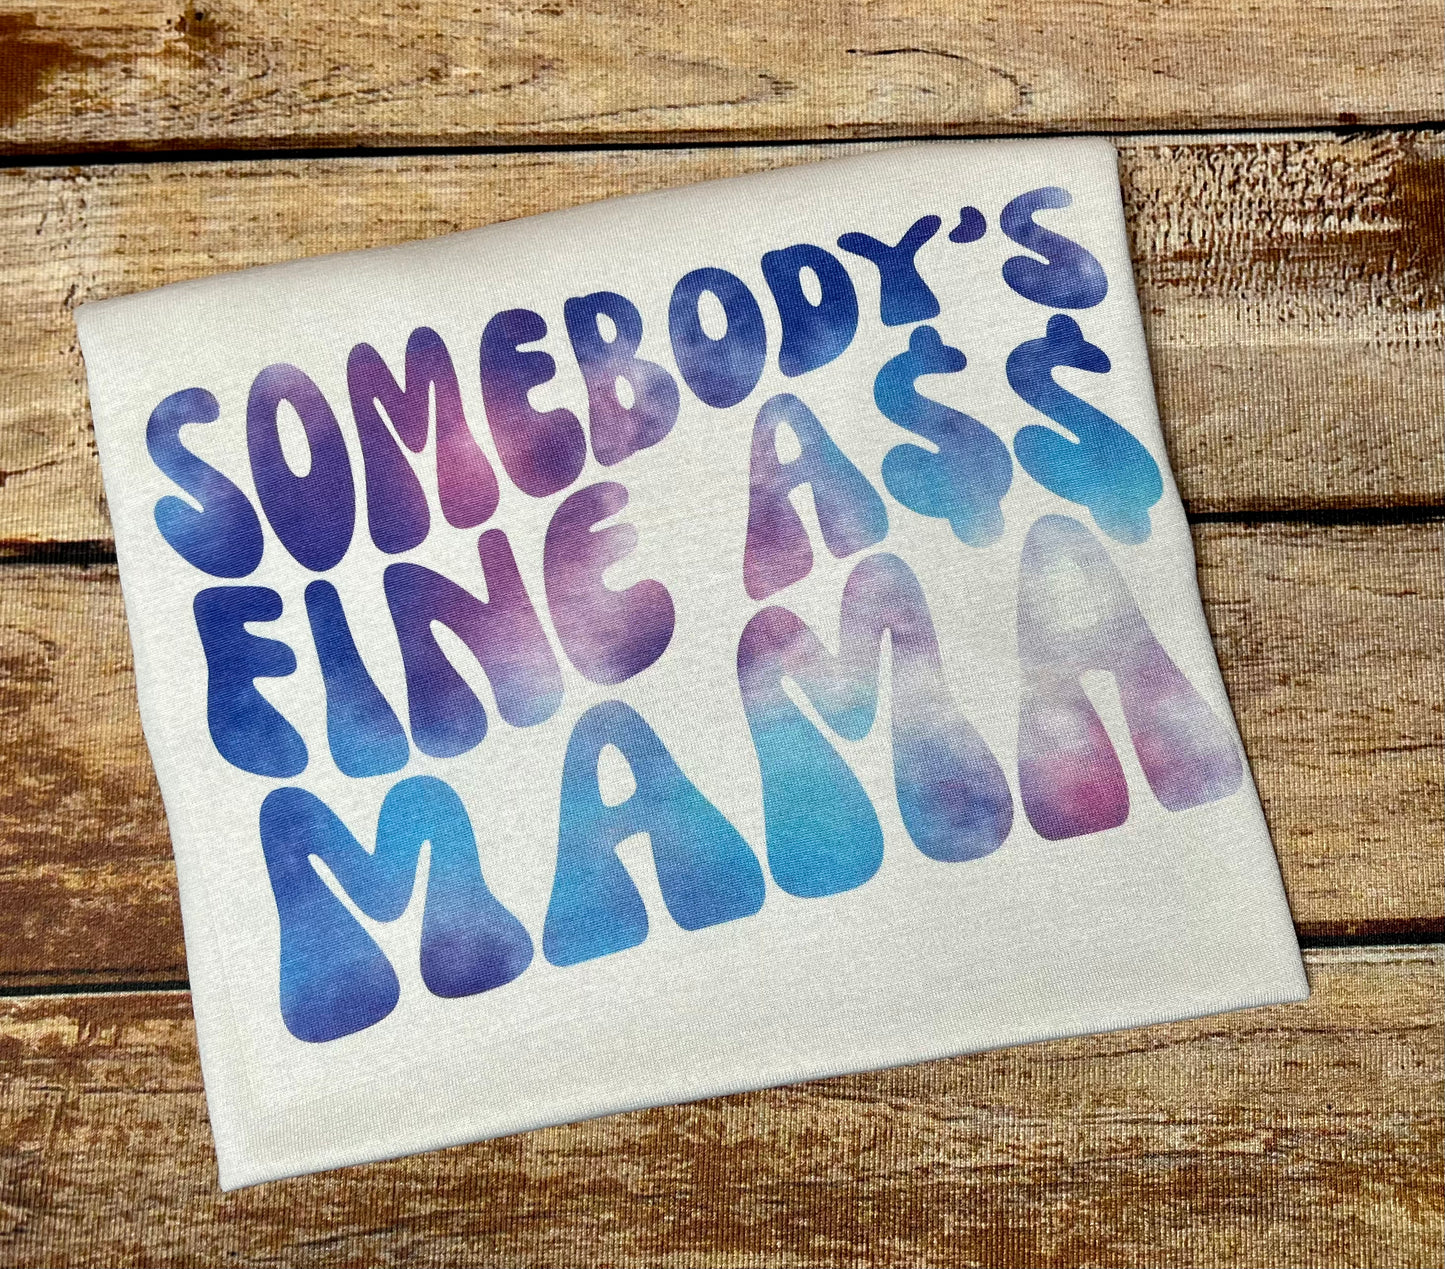 Somebody’s fine ass mama T-shirt